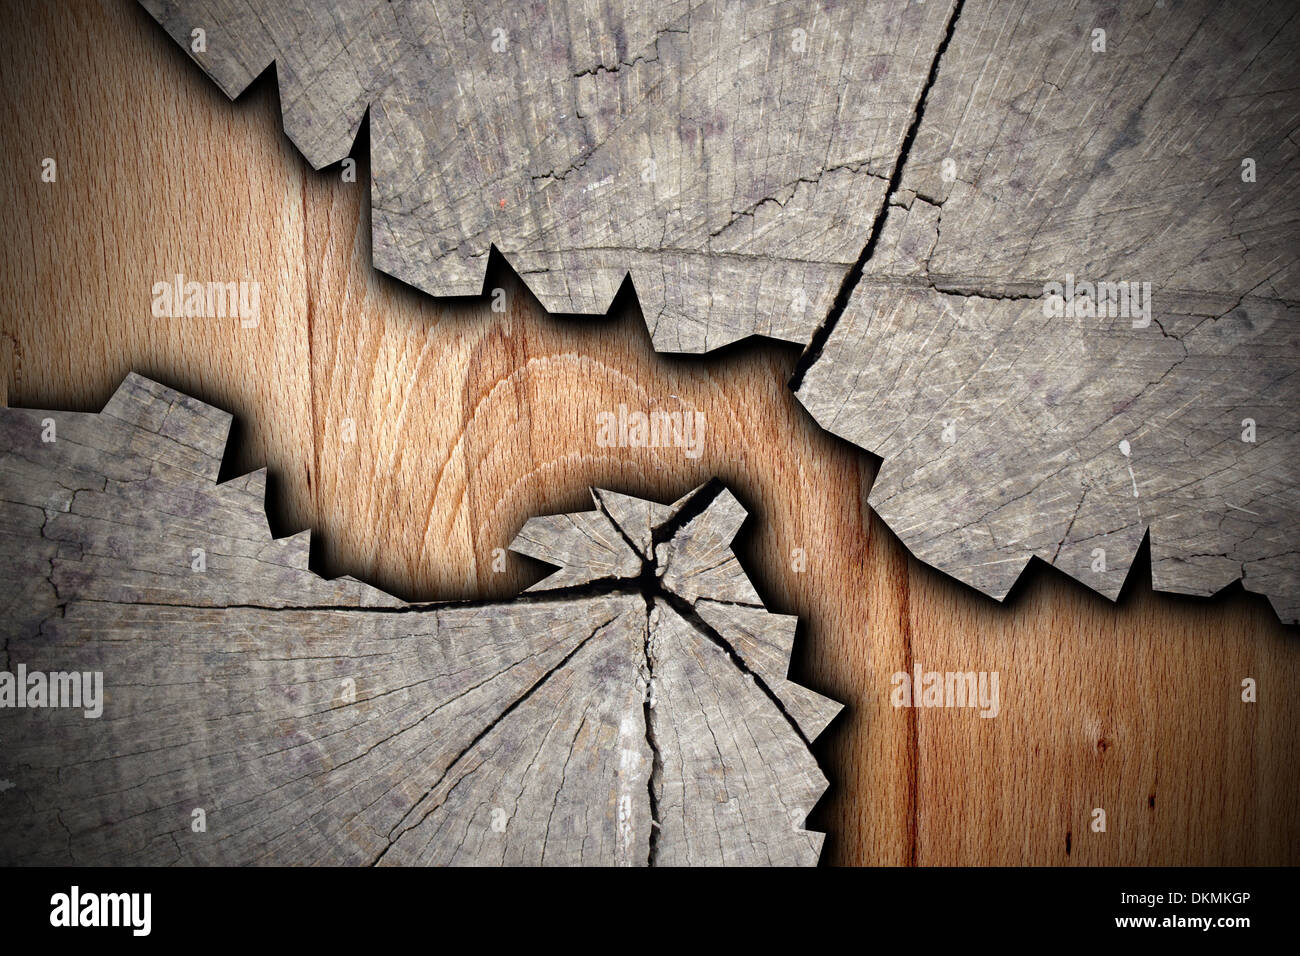 interesting wood texture with cracked tree stump Stock Photo